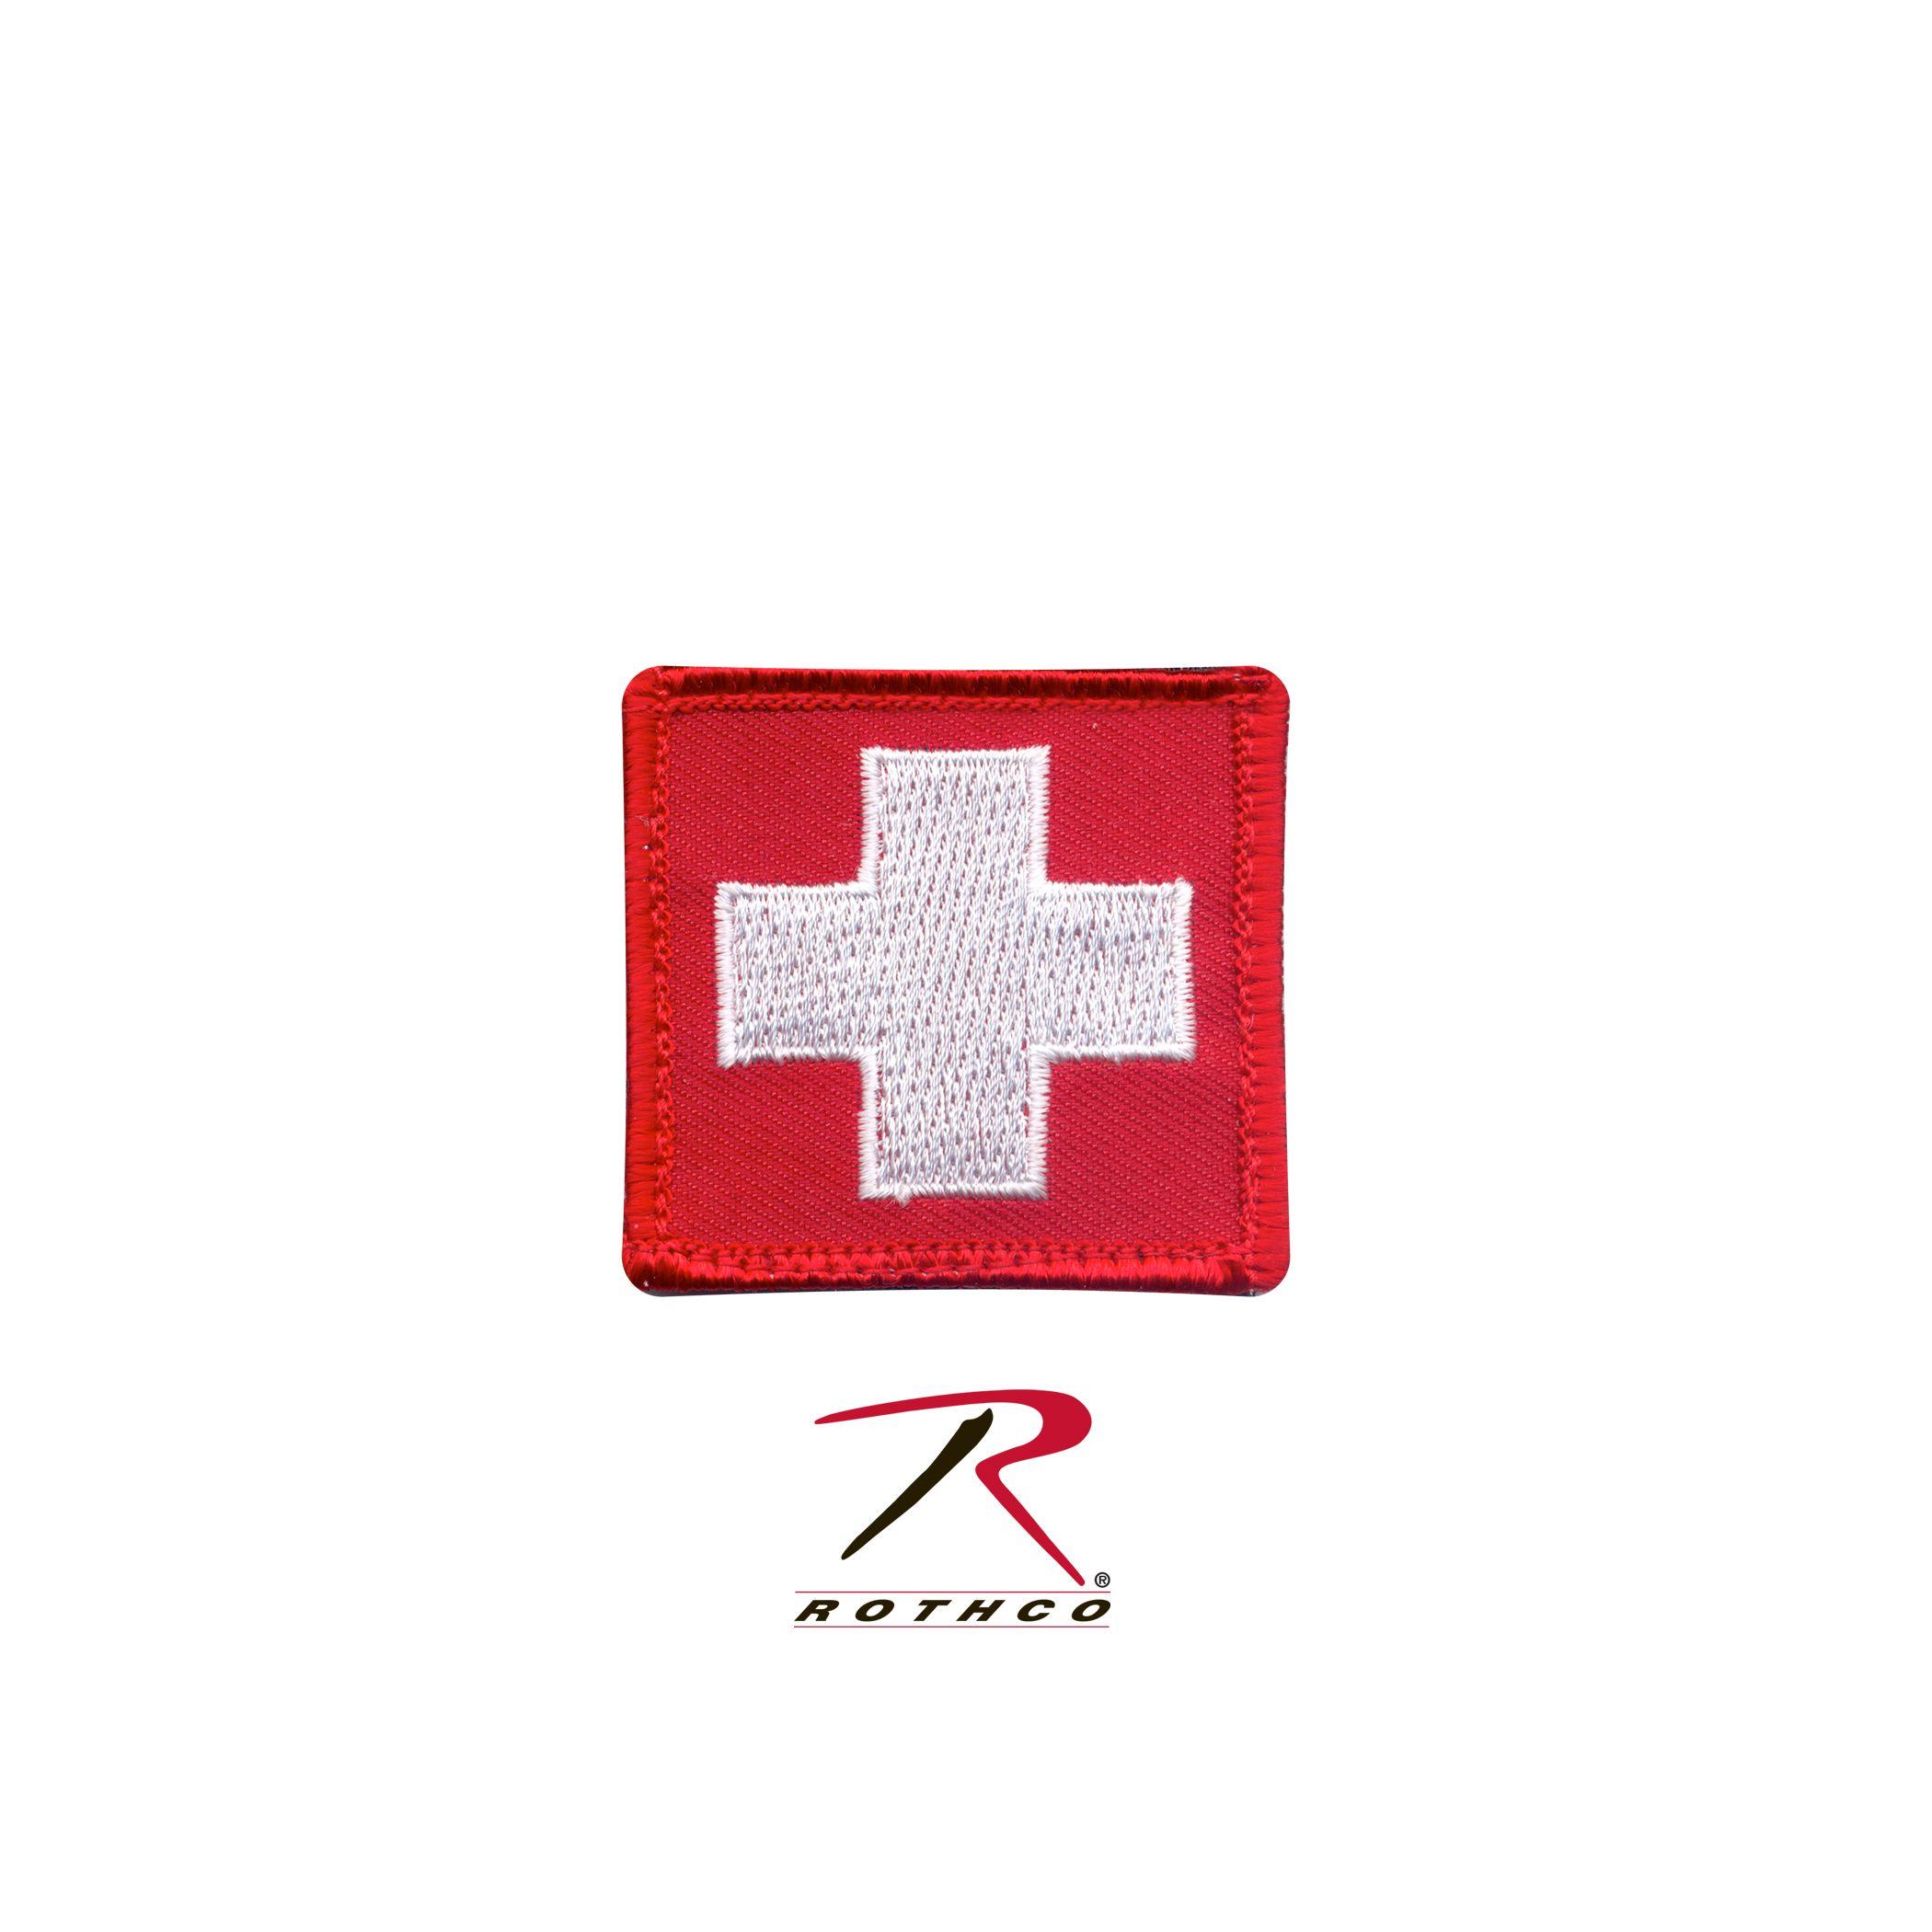 Red Cross Company Logo - Red square white cross Logos